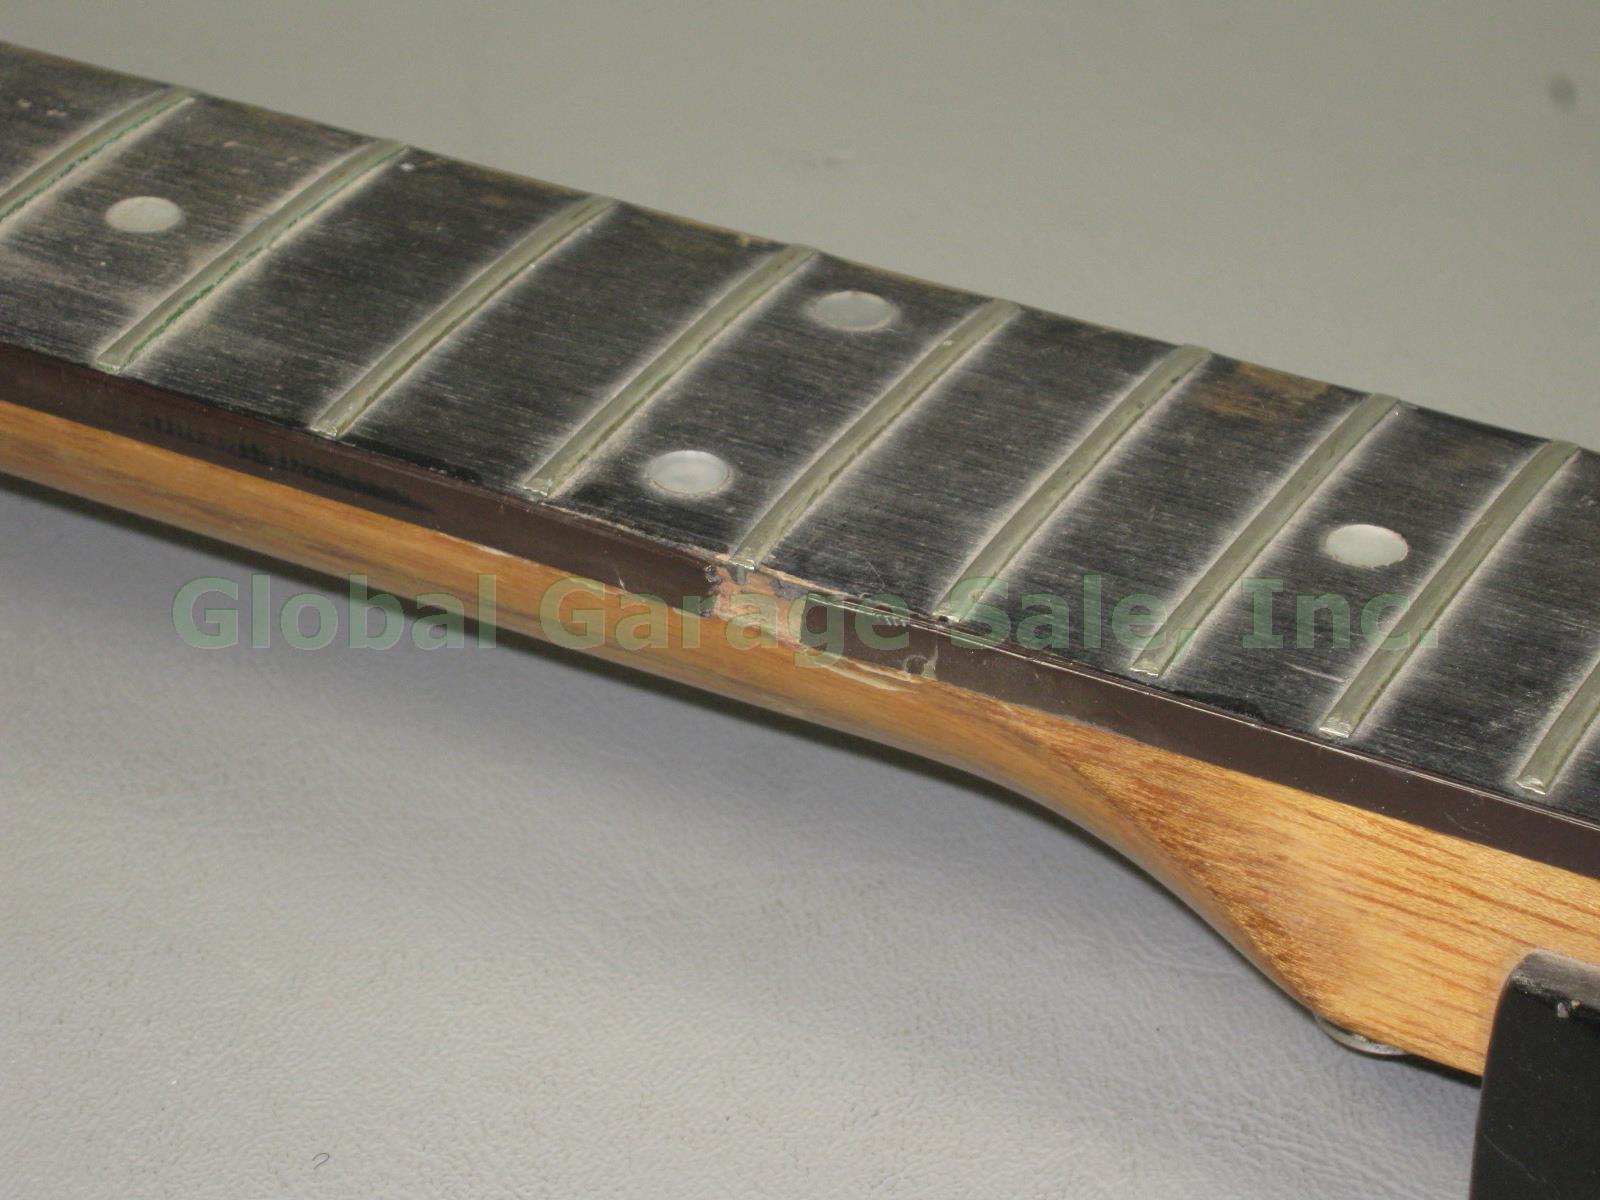 Vtg Harmony Electric Guitar MIJ? Japan? Lawsuit Era? As-Is For Parts Or Repair 2